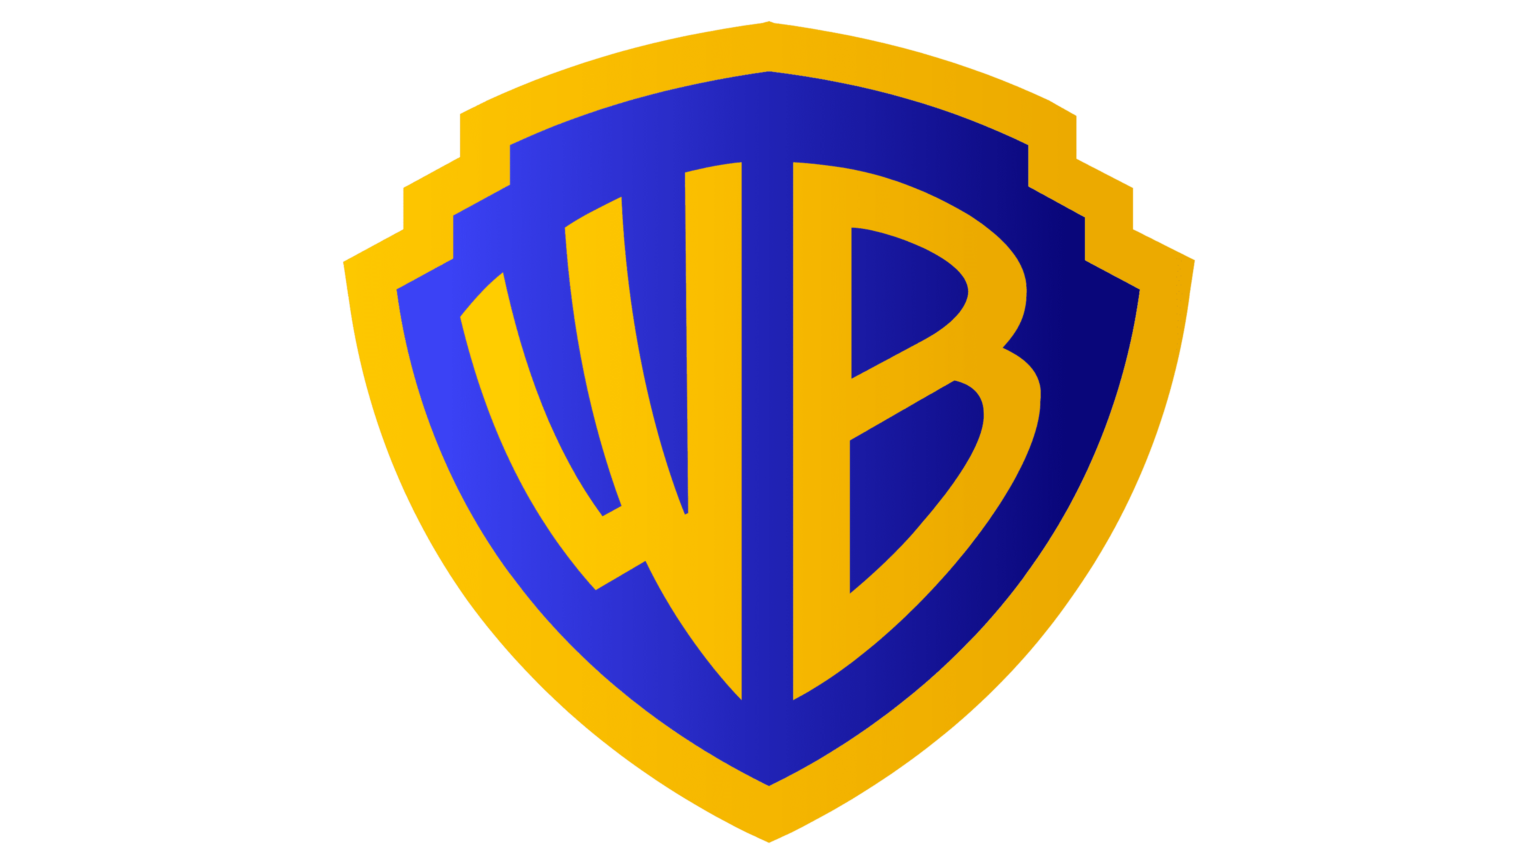 Warner Bros logo and symbol, meaning, history, PNG